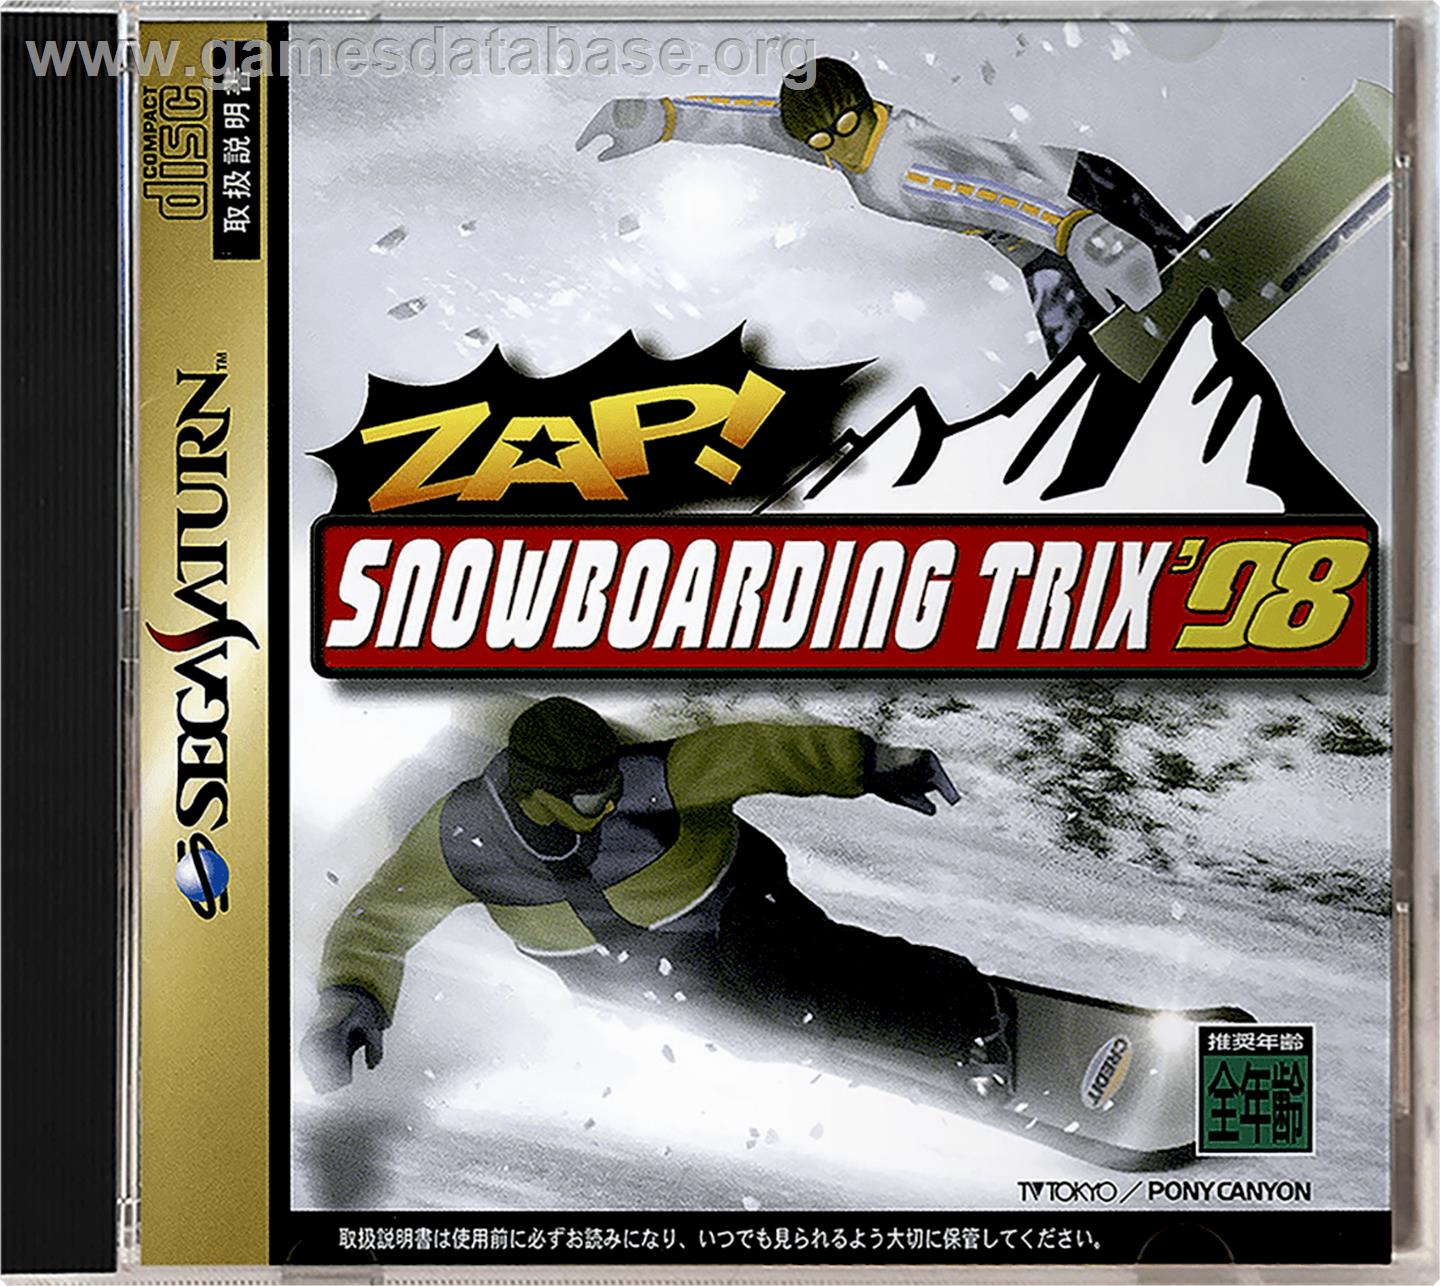 Zap! Snowboarding Trix '98 - Sega Saturn - Artwork - Box